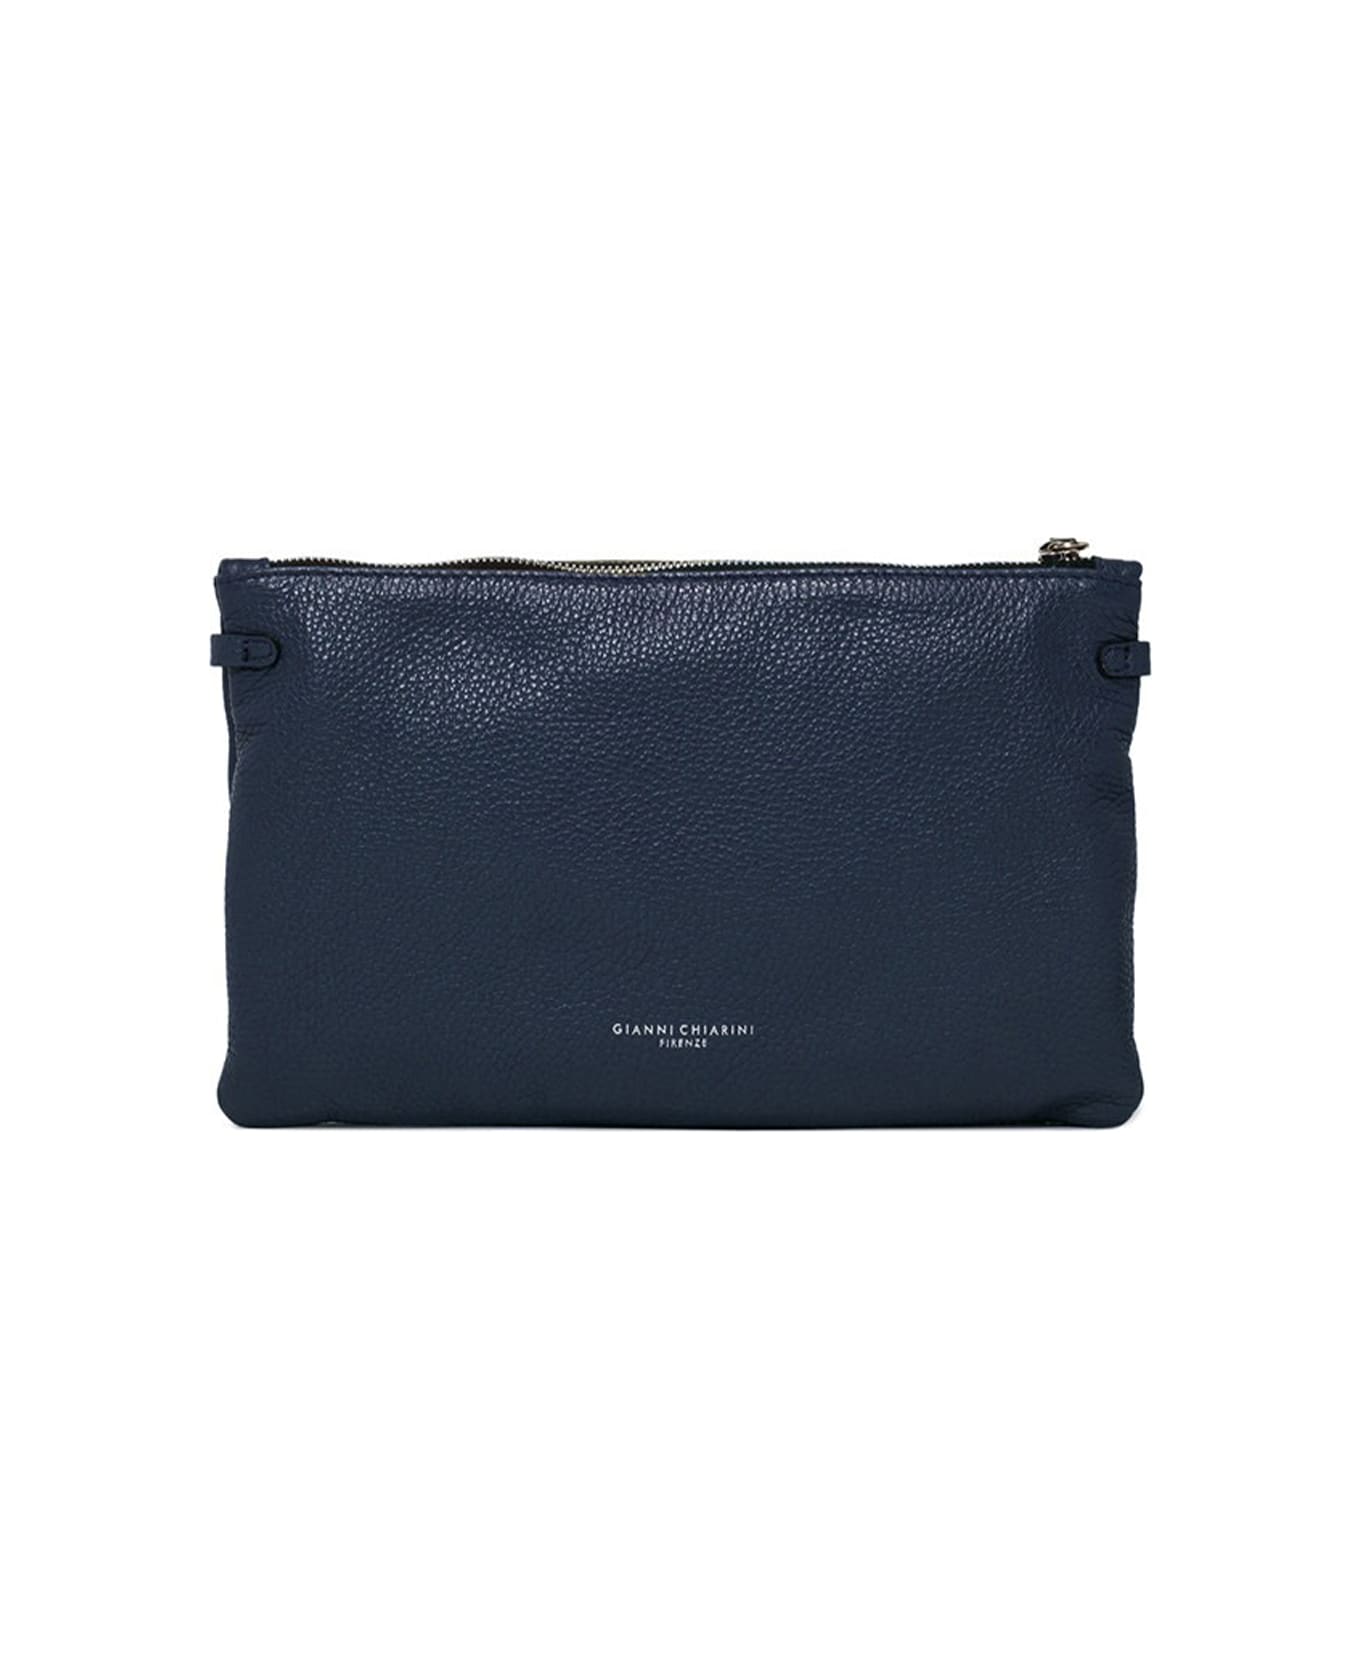 Gianni Chiarini Hermy Navy Blue Leather Clutch Bag - NAVY